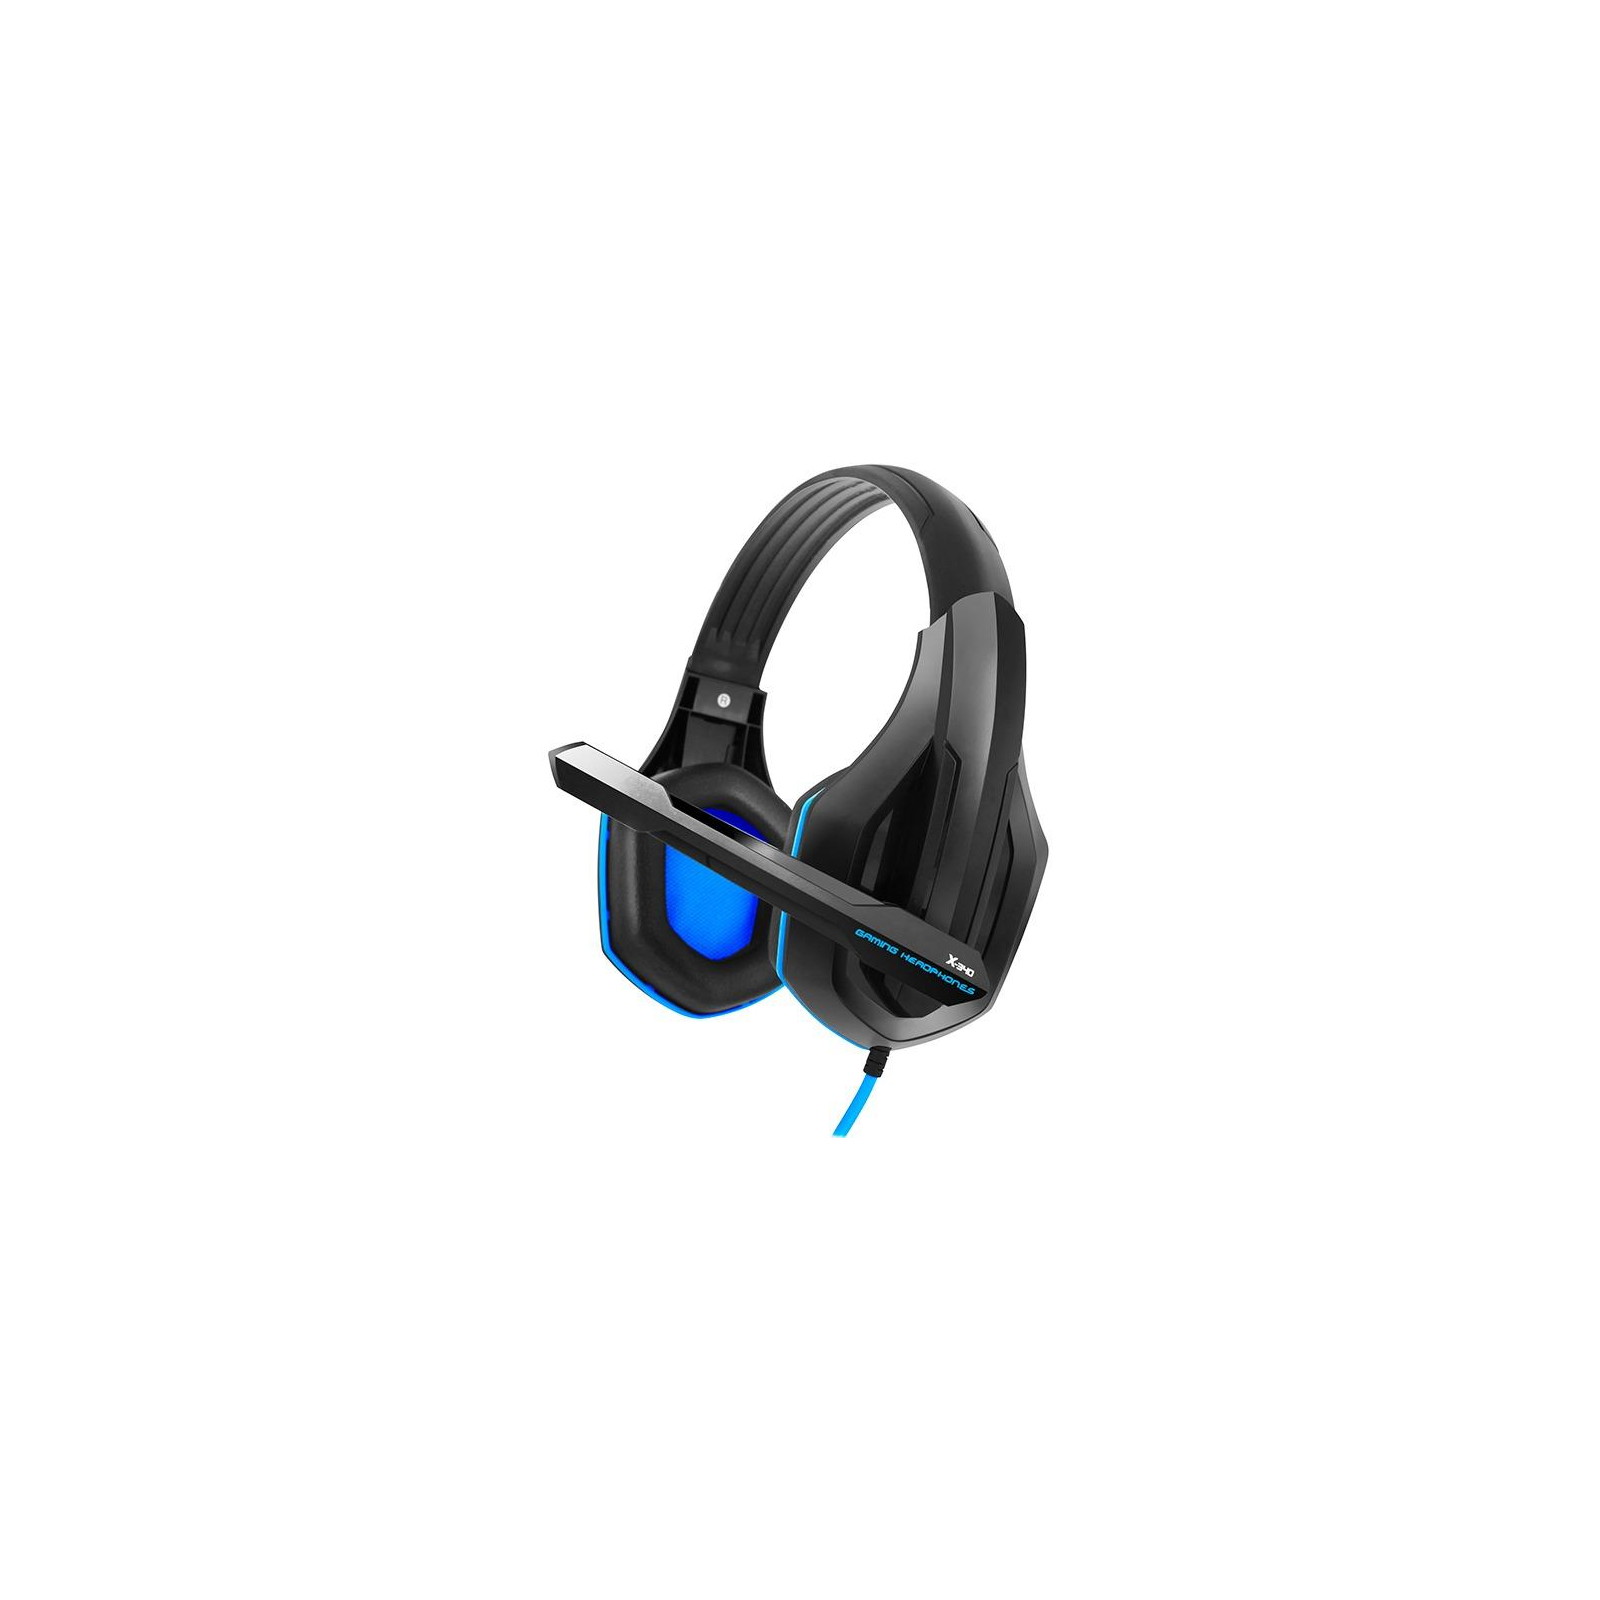 Навушники Gemix X-340 black-blue